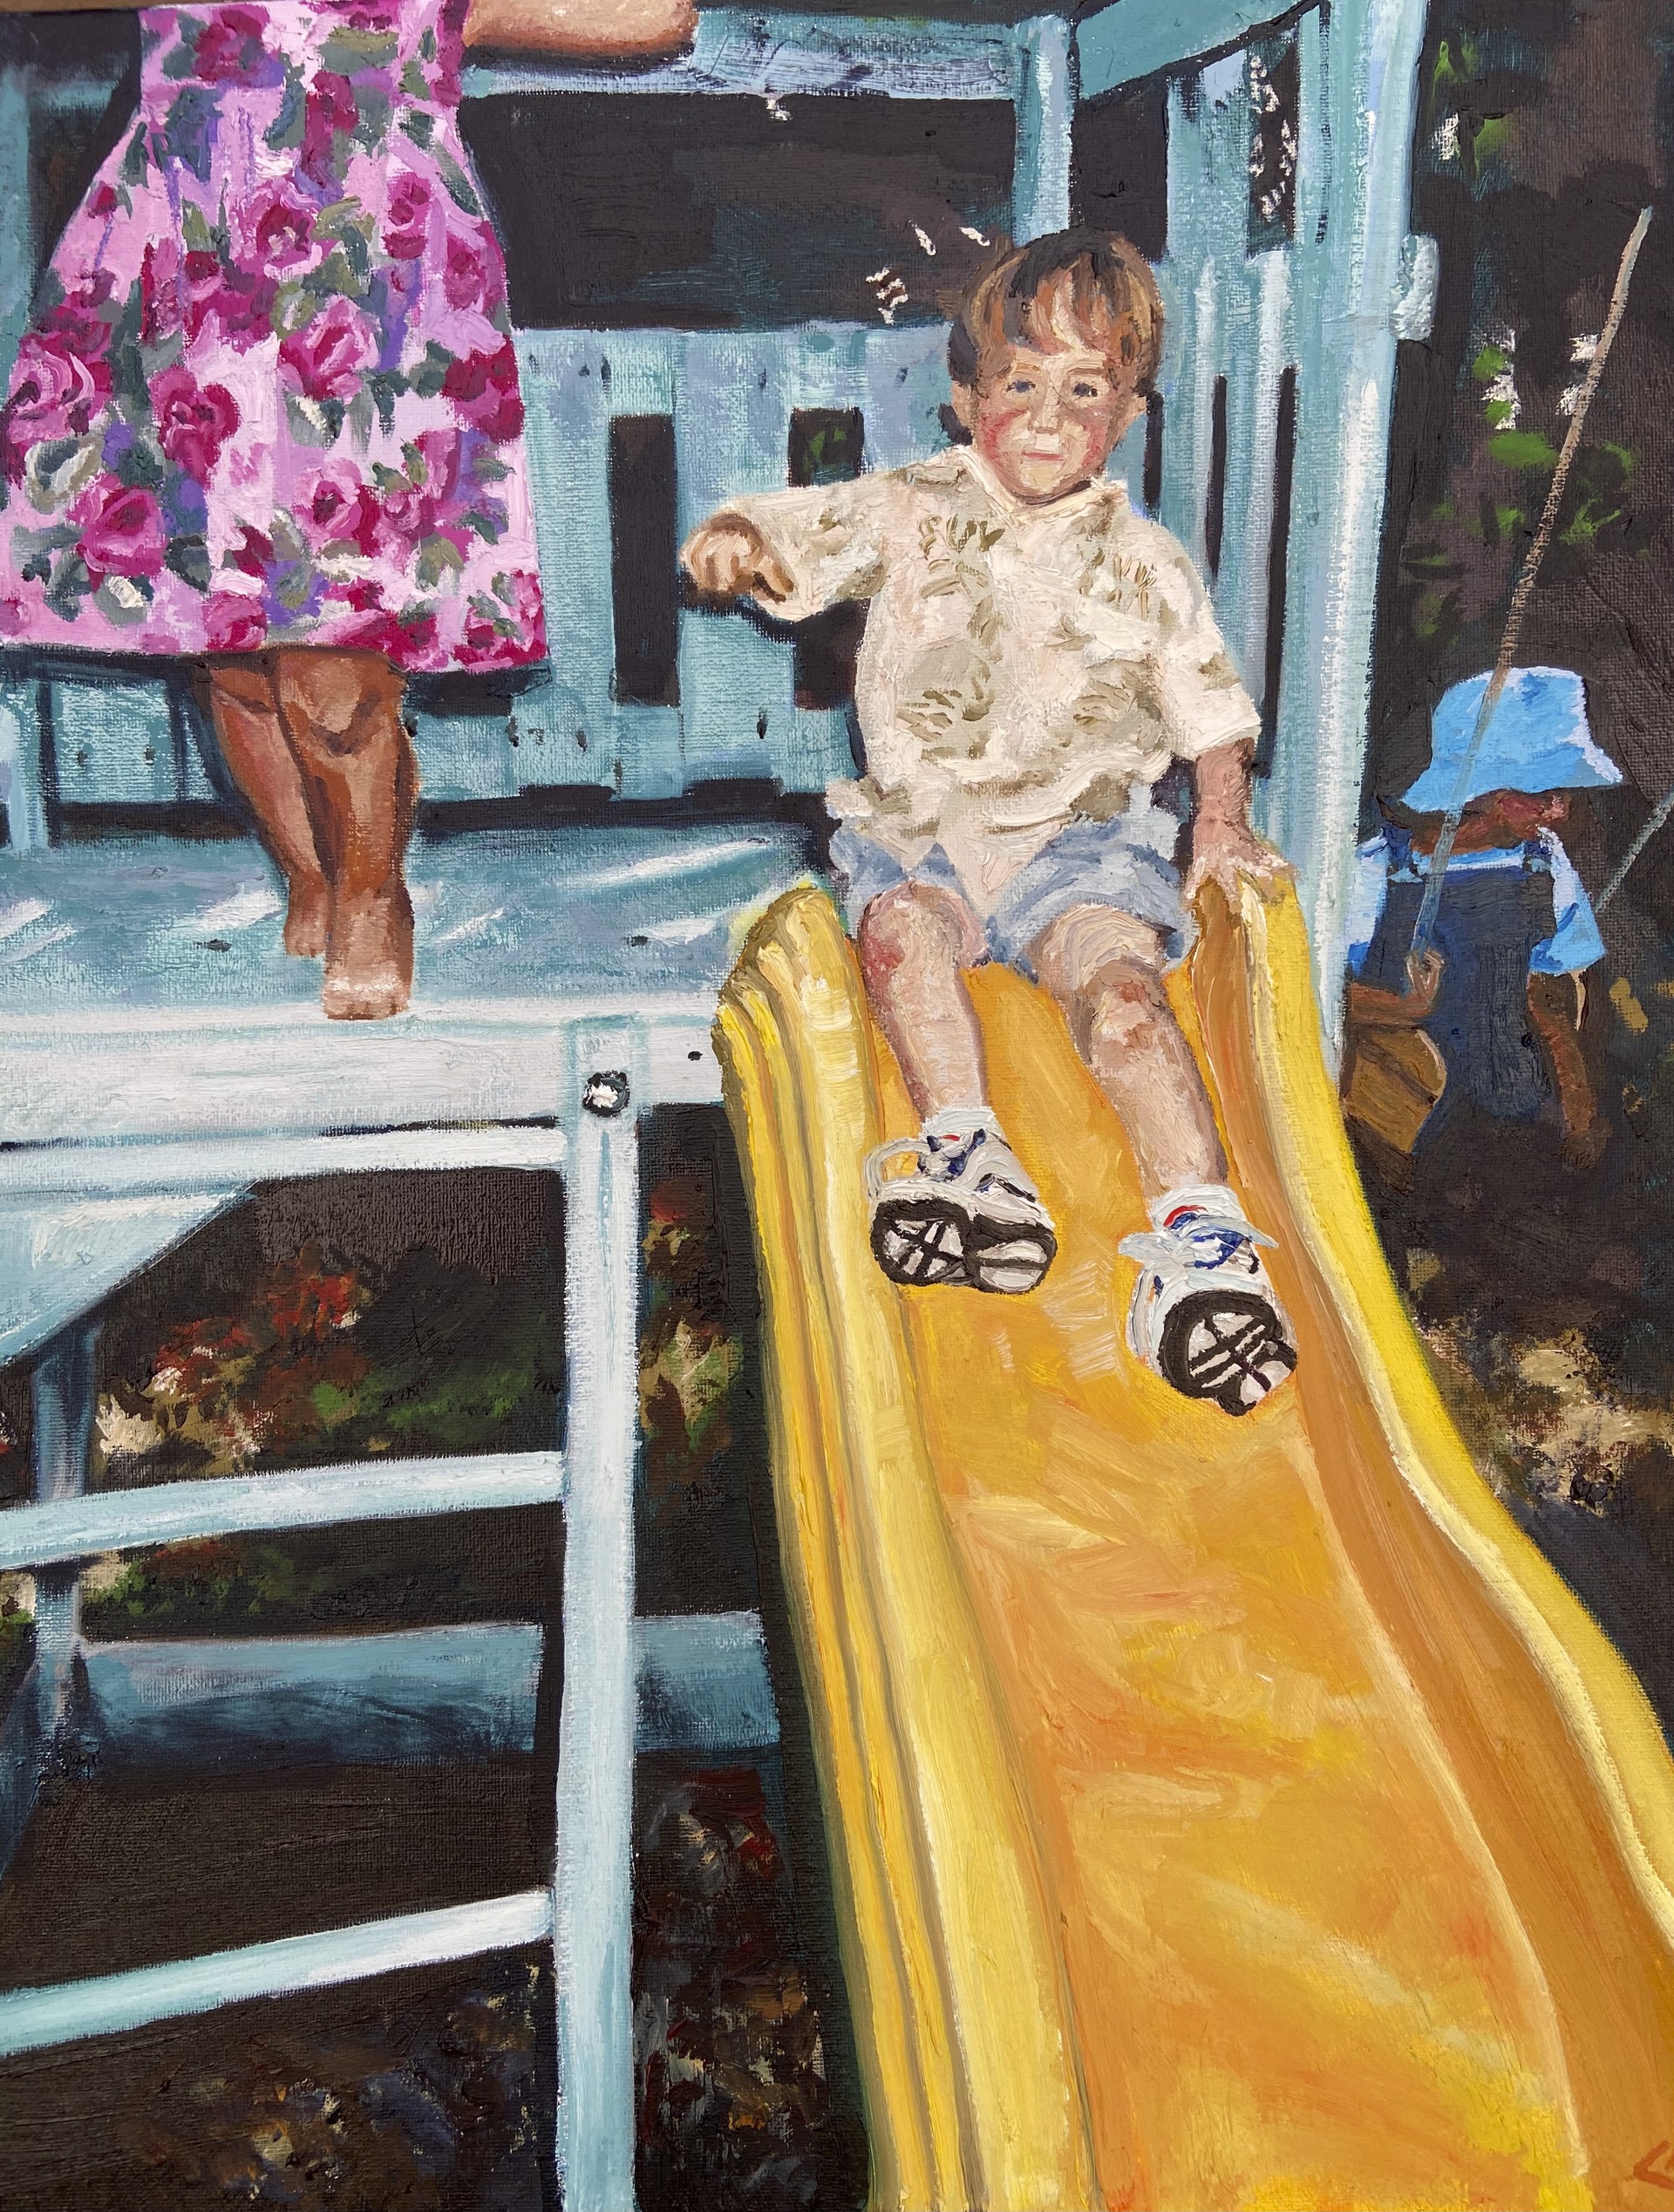 Little Austin on the Slide by Chloe Bunde